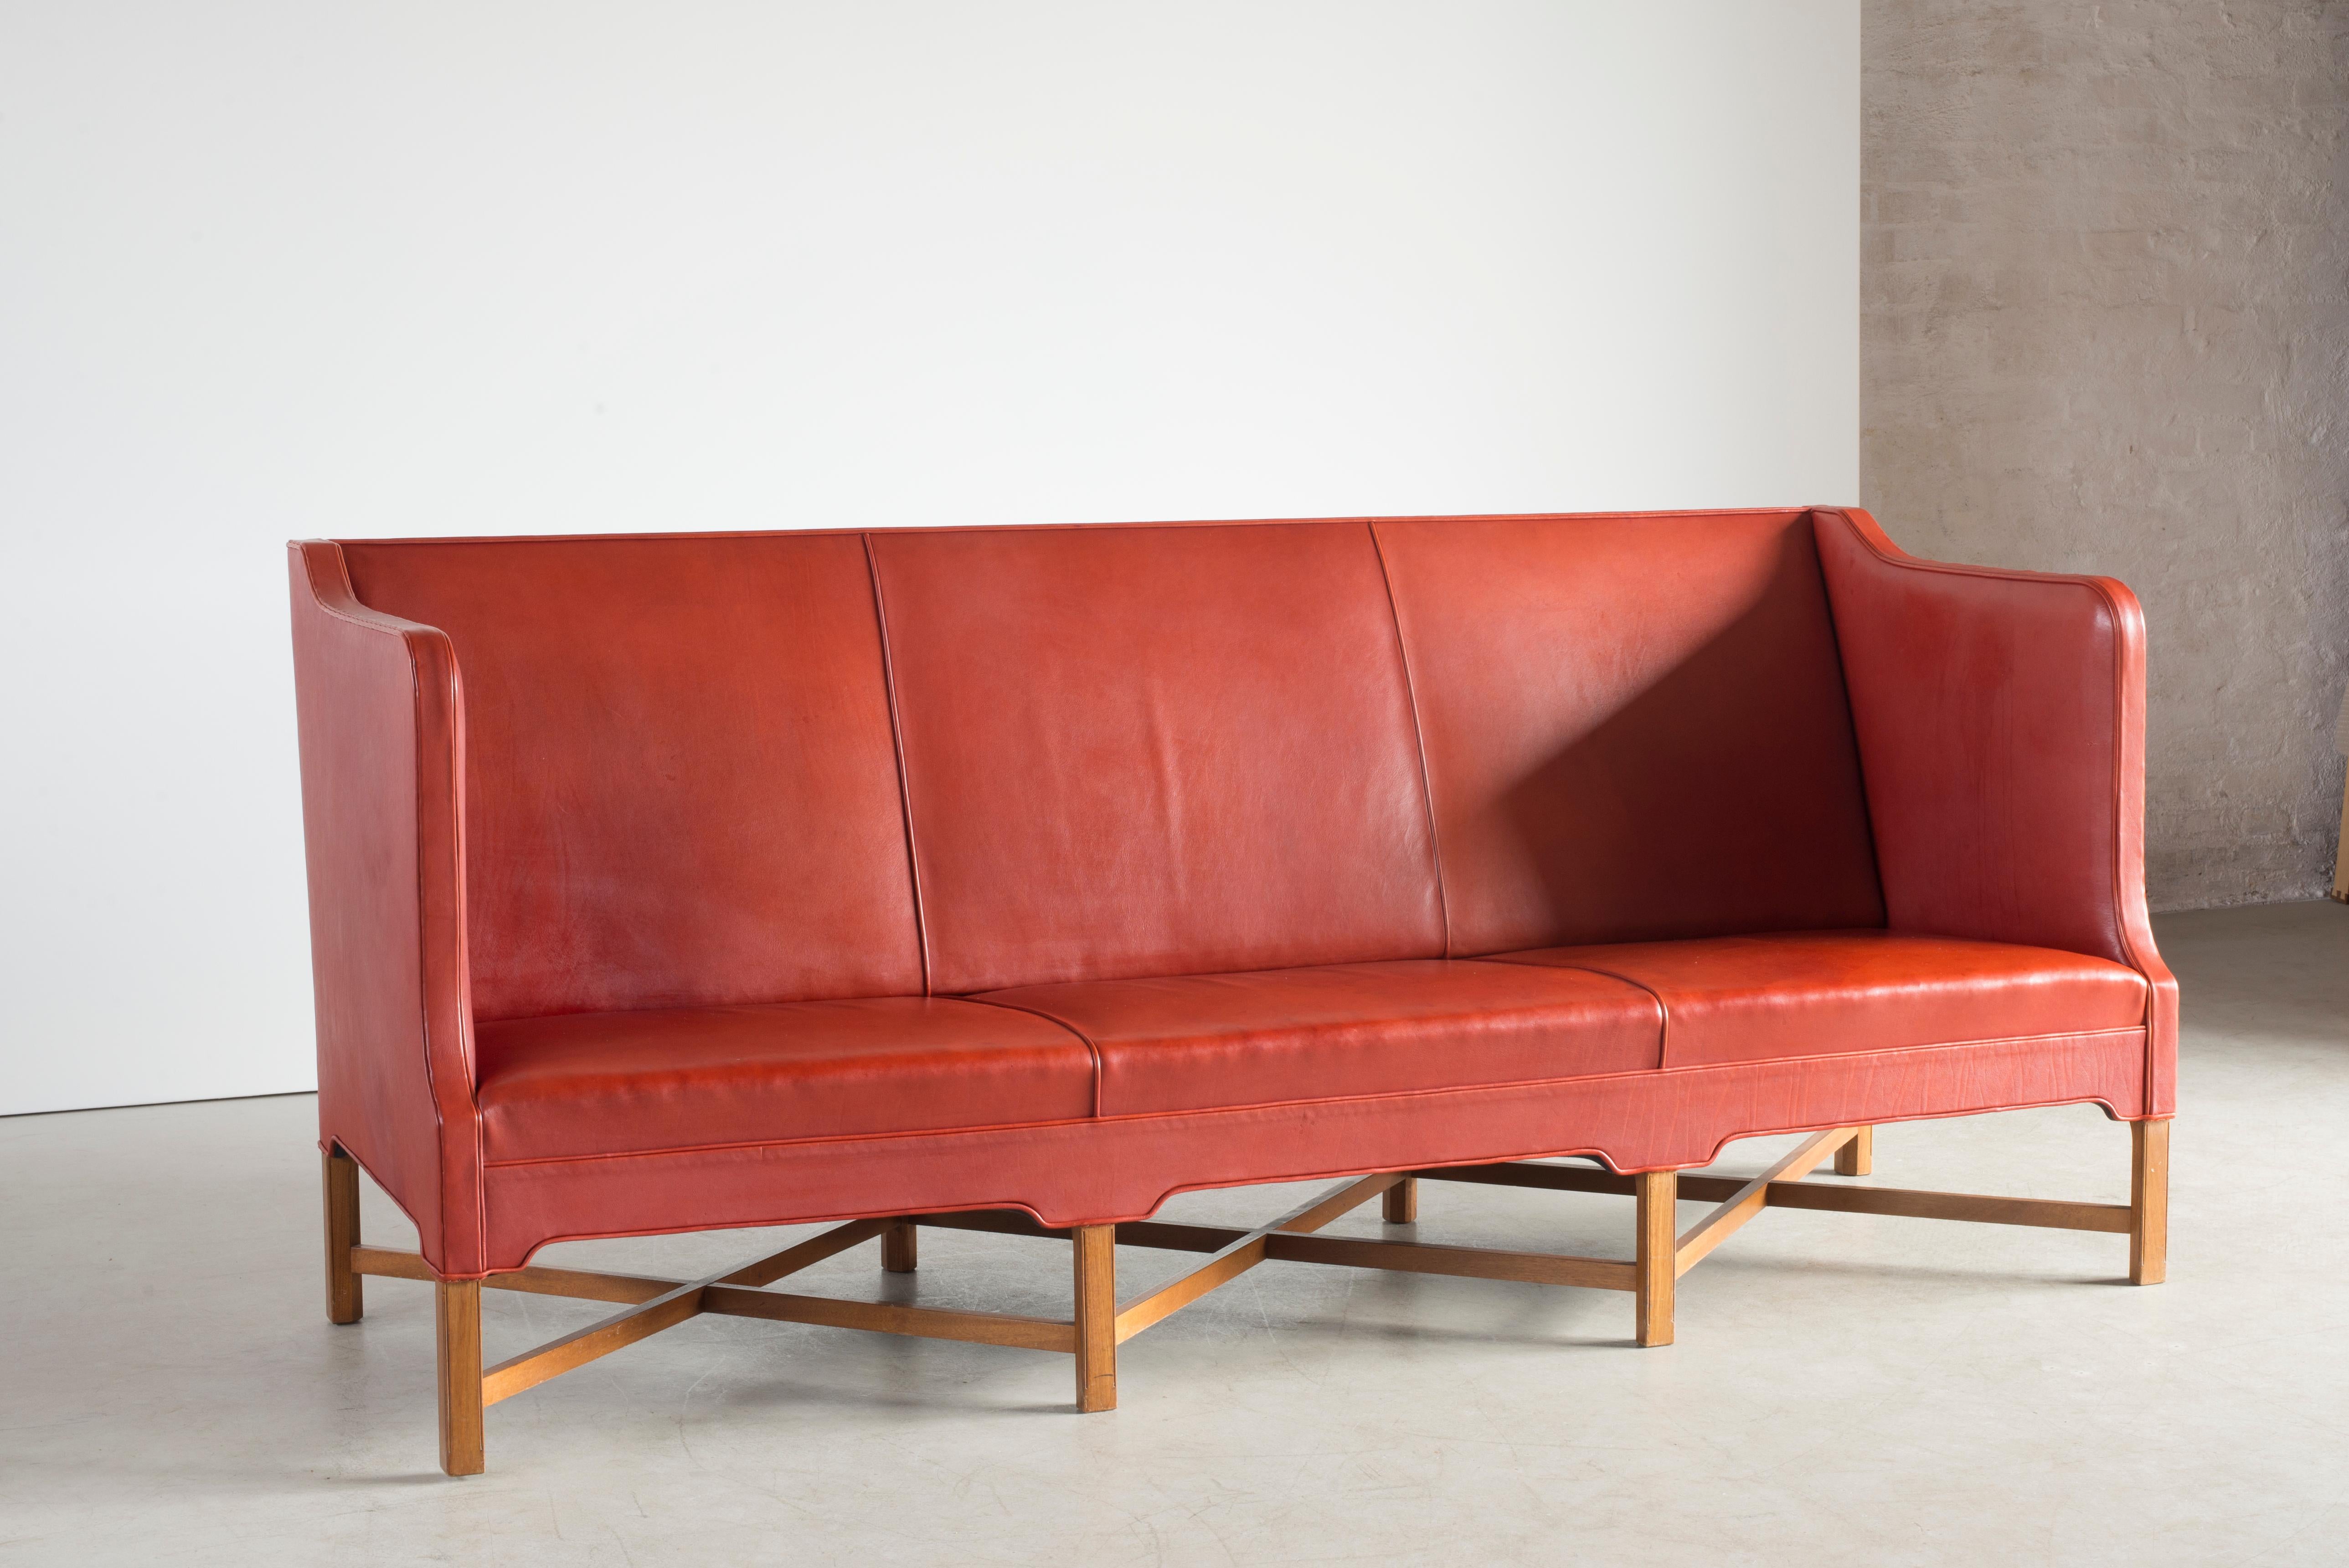 Kaare Klint Dreisitziges Sofa für Rud. Rasmussen (Skandinavische Moderne) im Angebot